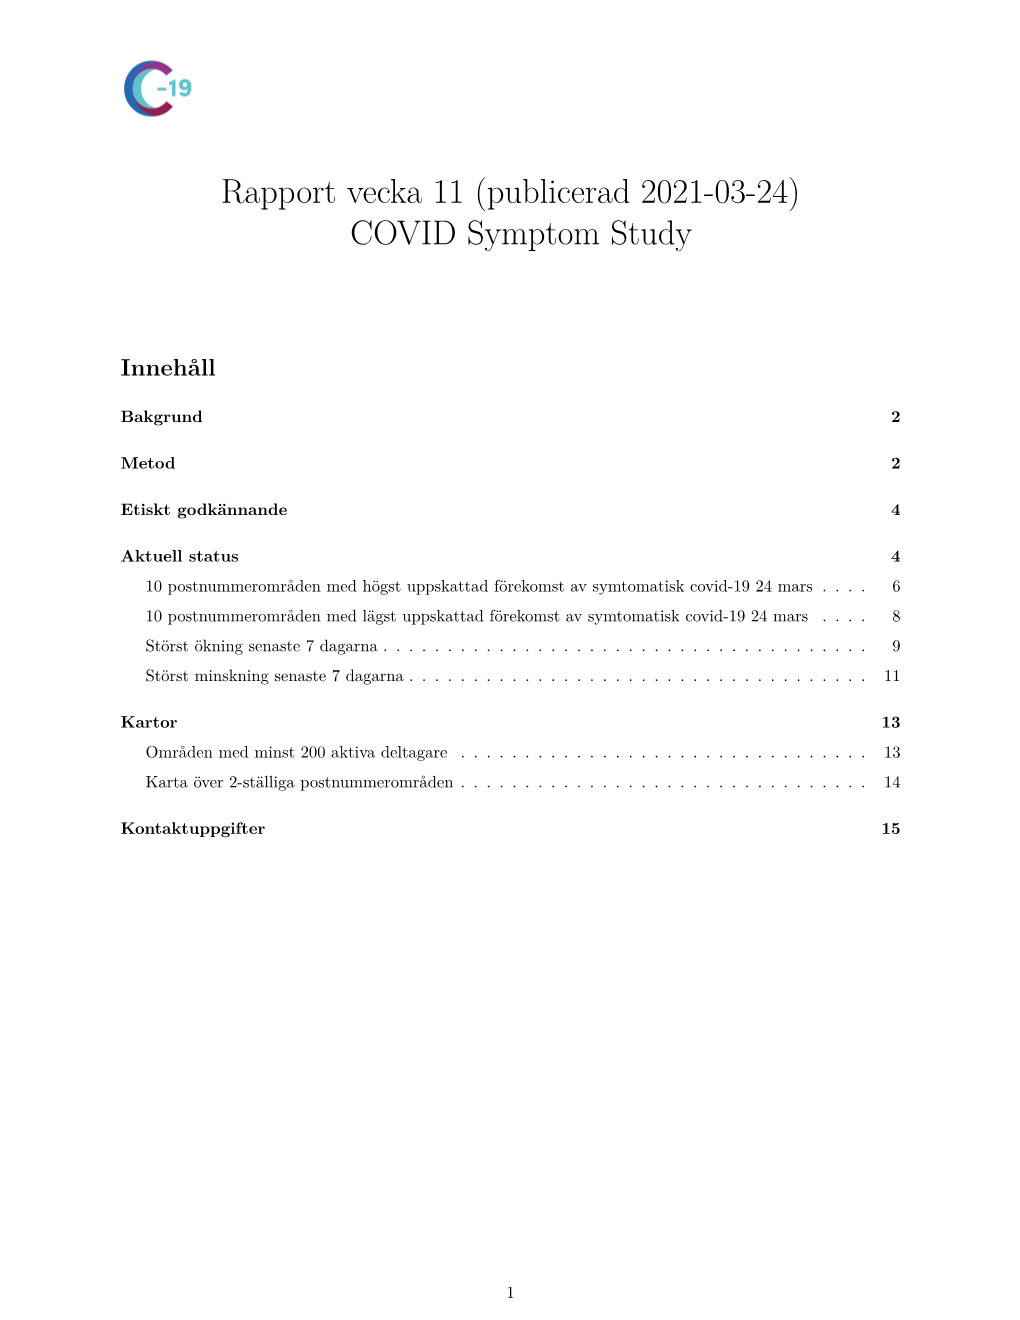 Rapport Vecka 11 (Publicerad 2021-03-24) COVID Symptom Study